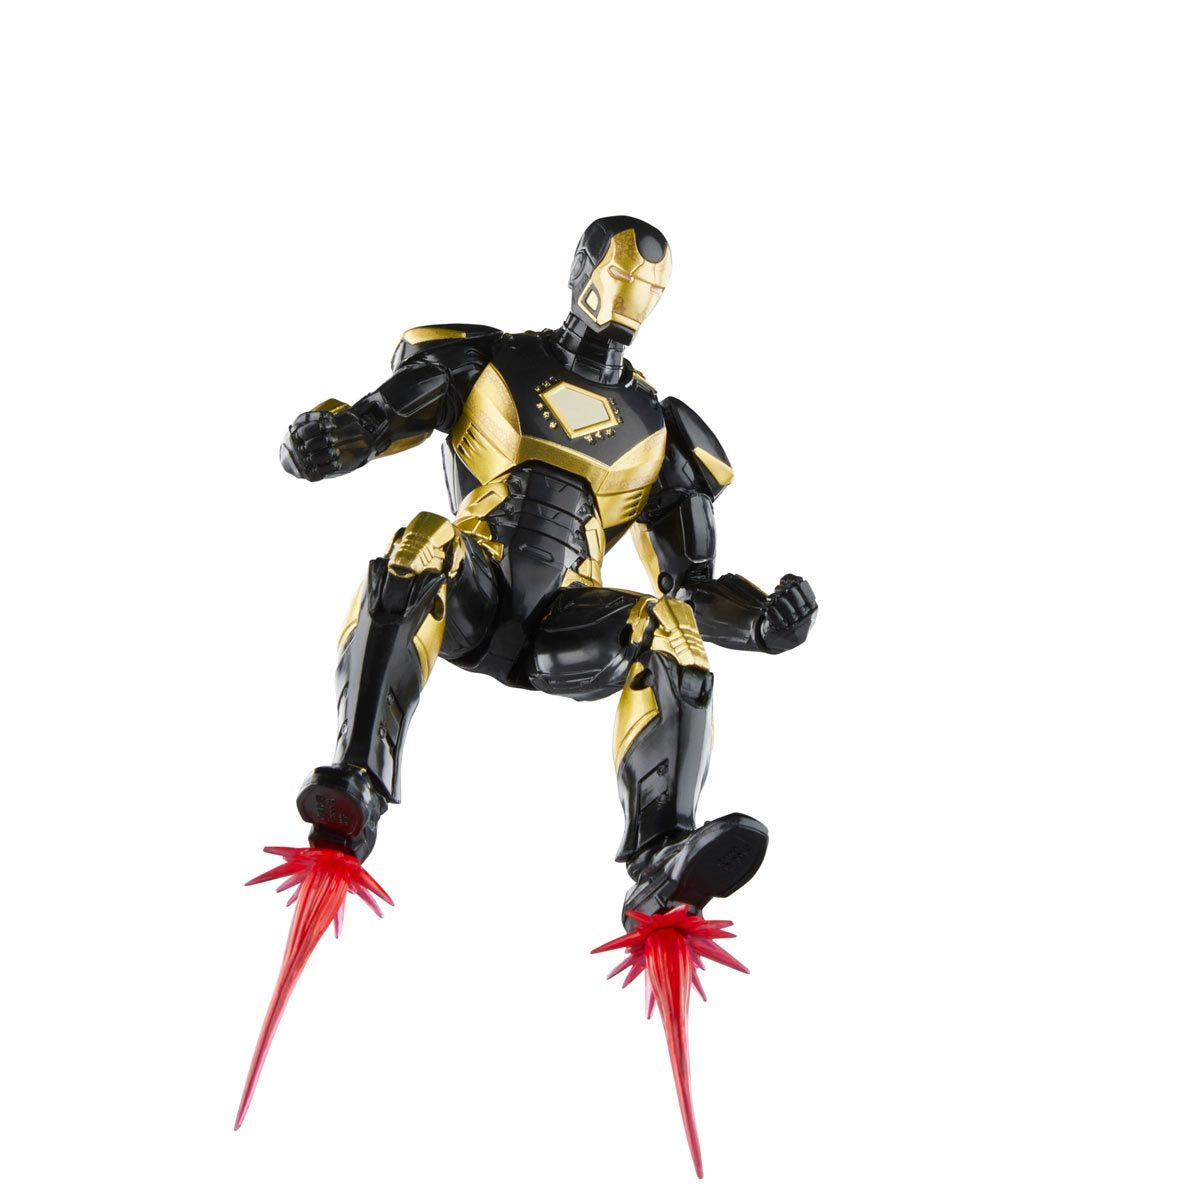 Marvel Knights Marvel Legends Iron Man 6-Inch Action Figure